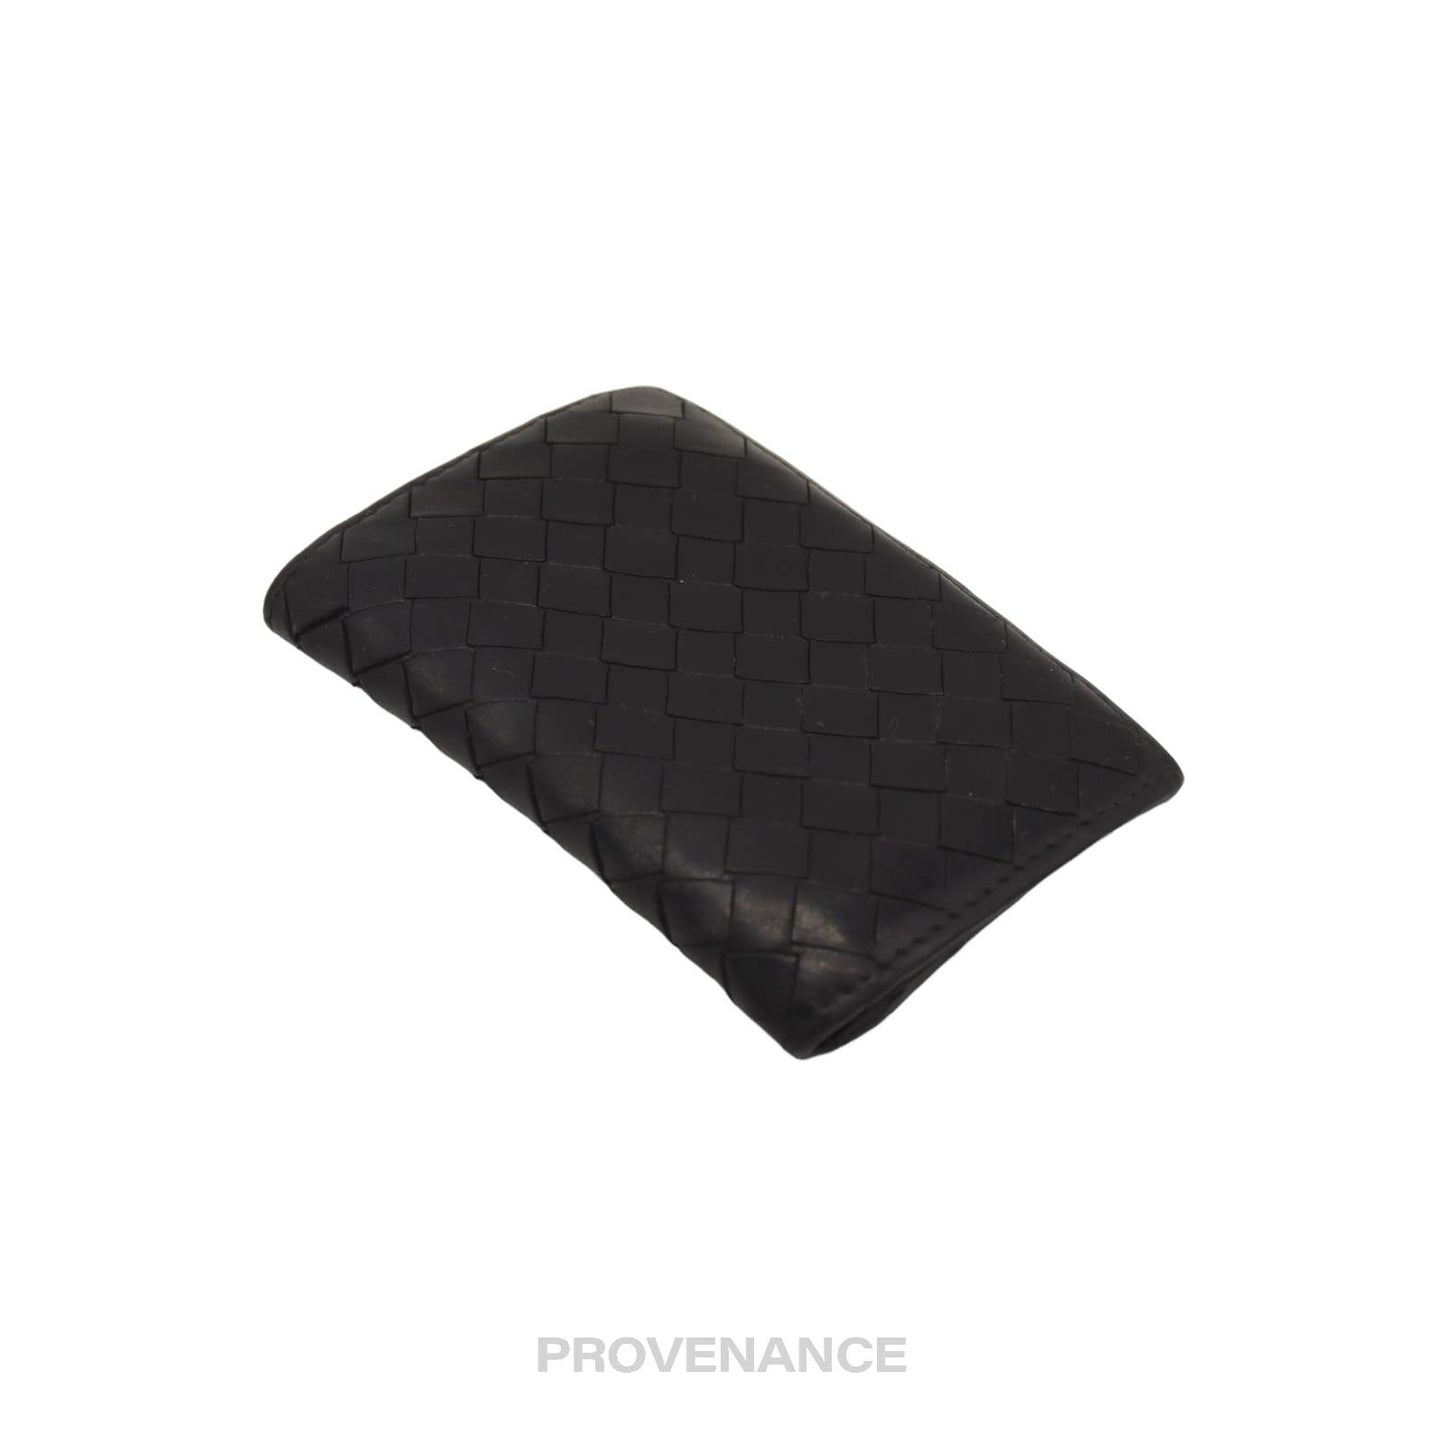 🔴 Bottega Veneta Pocket Organizer Wallet - Black